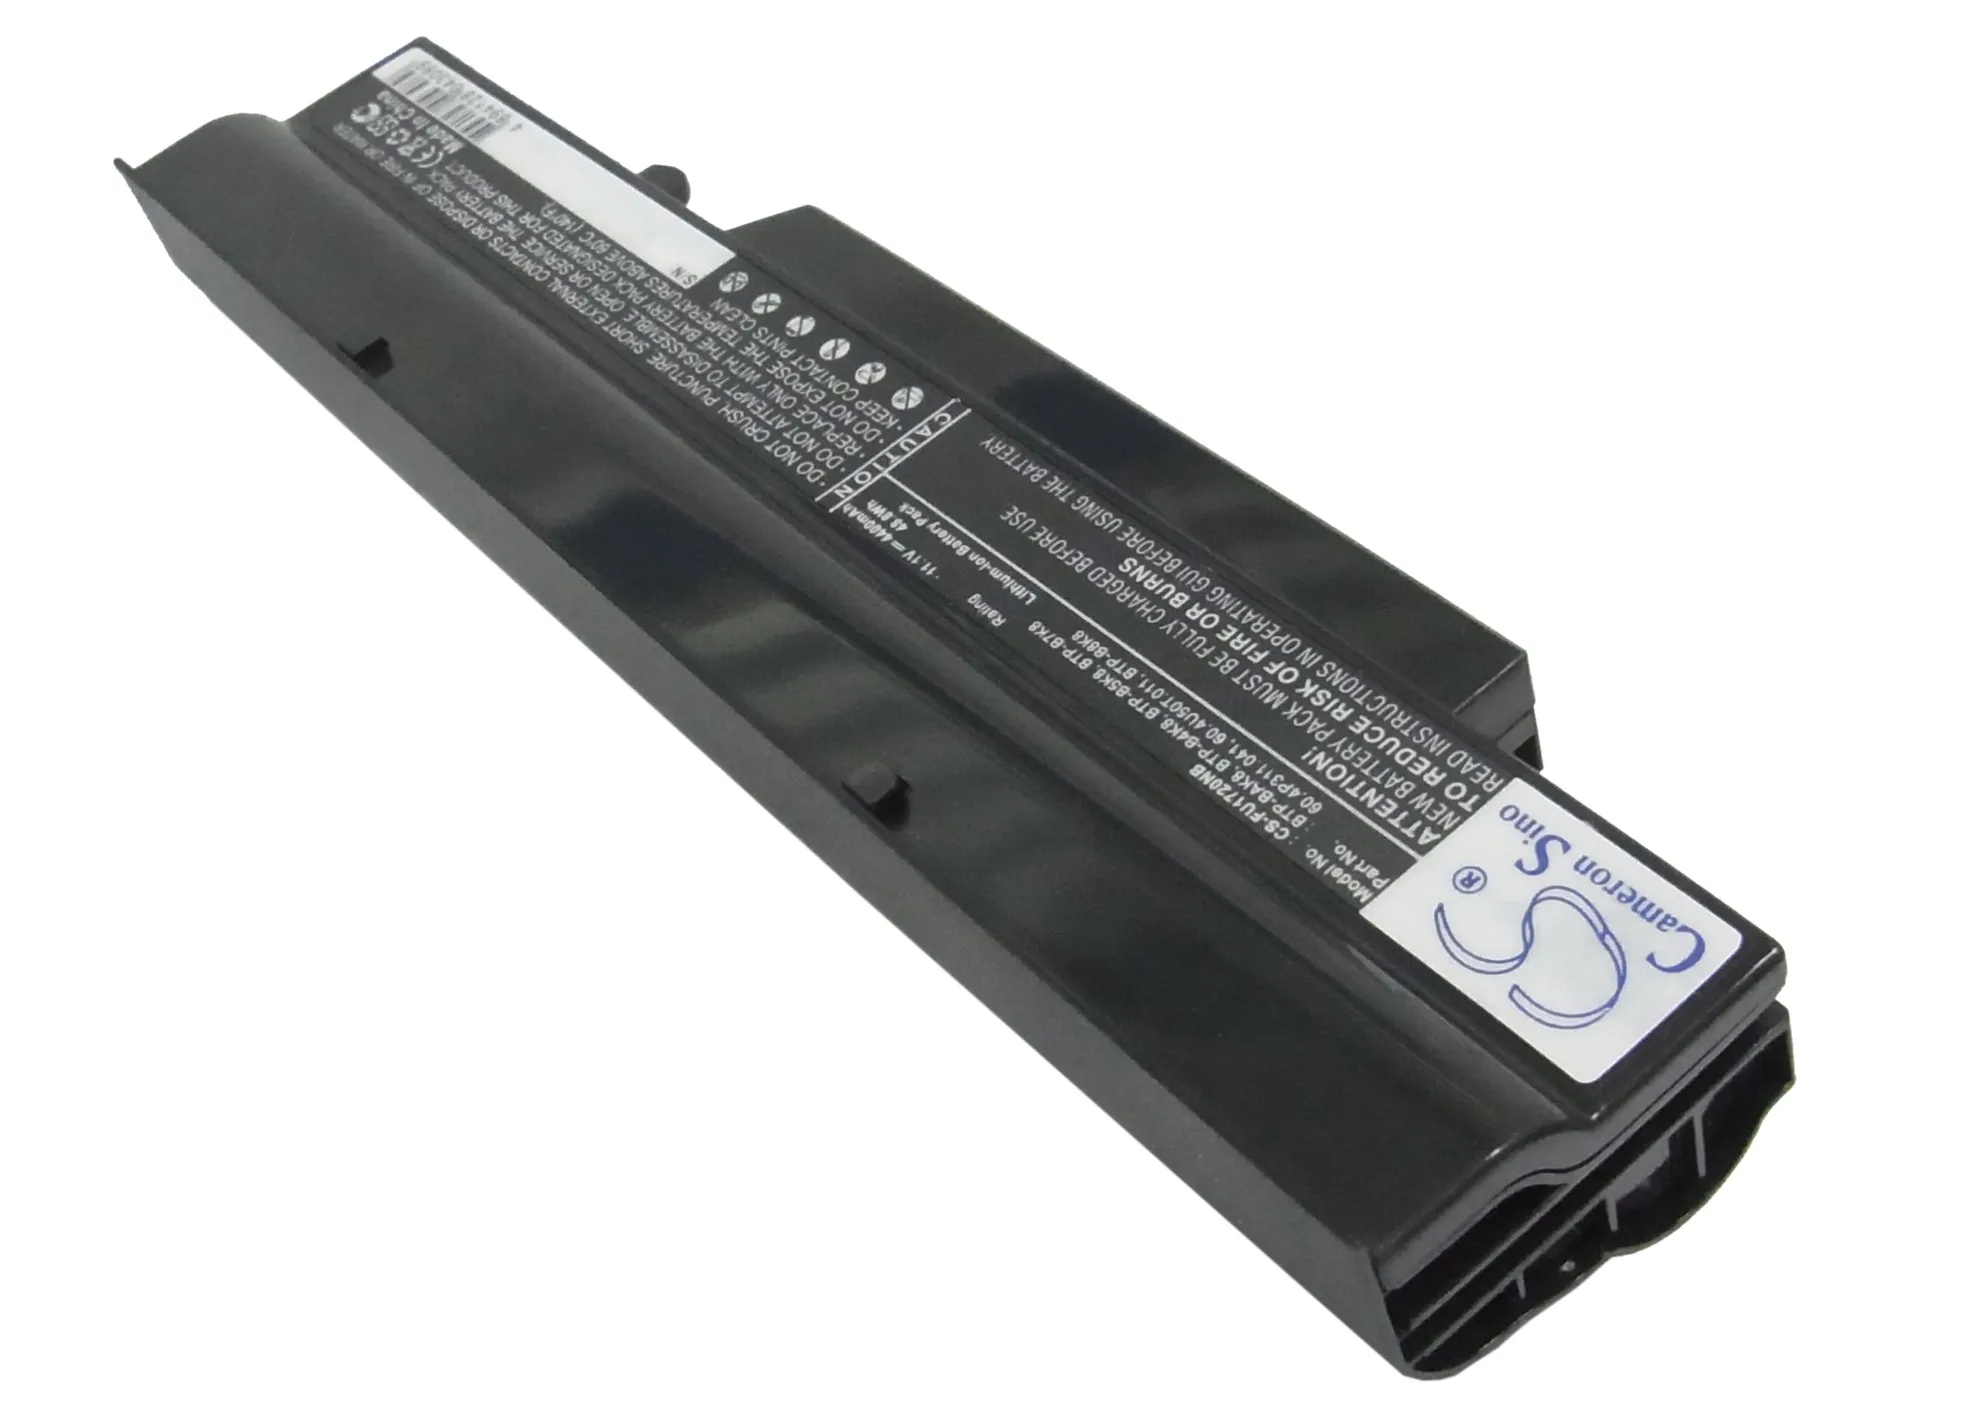 Батарея для ноутбука Fujitsu Siemens модель BTP-b7k8. Fujitsu Computers Siemens model no: BTP.c9k8 Lithium ion Battery Rechargeable Battery 11.1v= 5200mah. Аккумулятор ms105. Аккумуляторная батарея ms17-12.